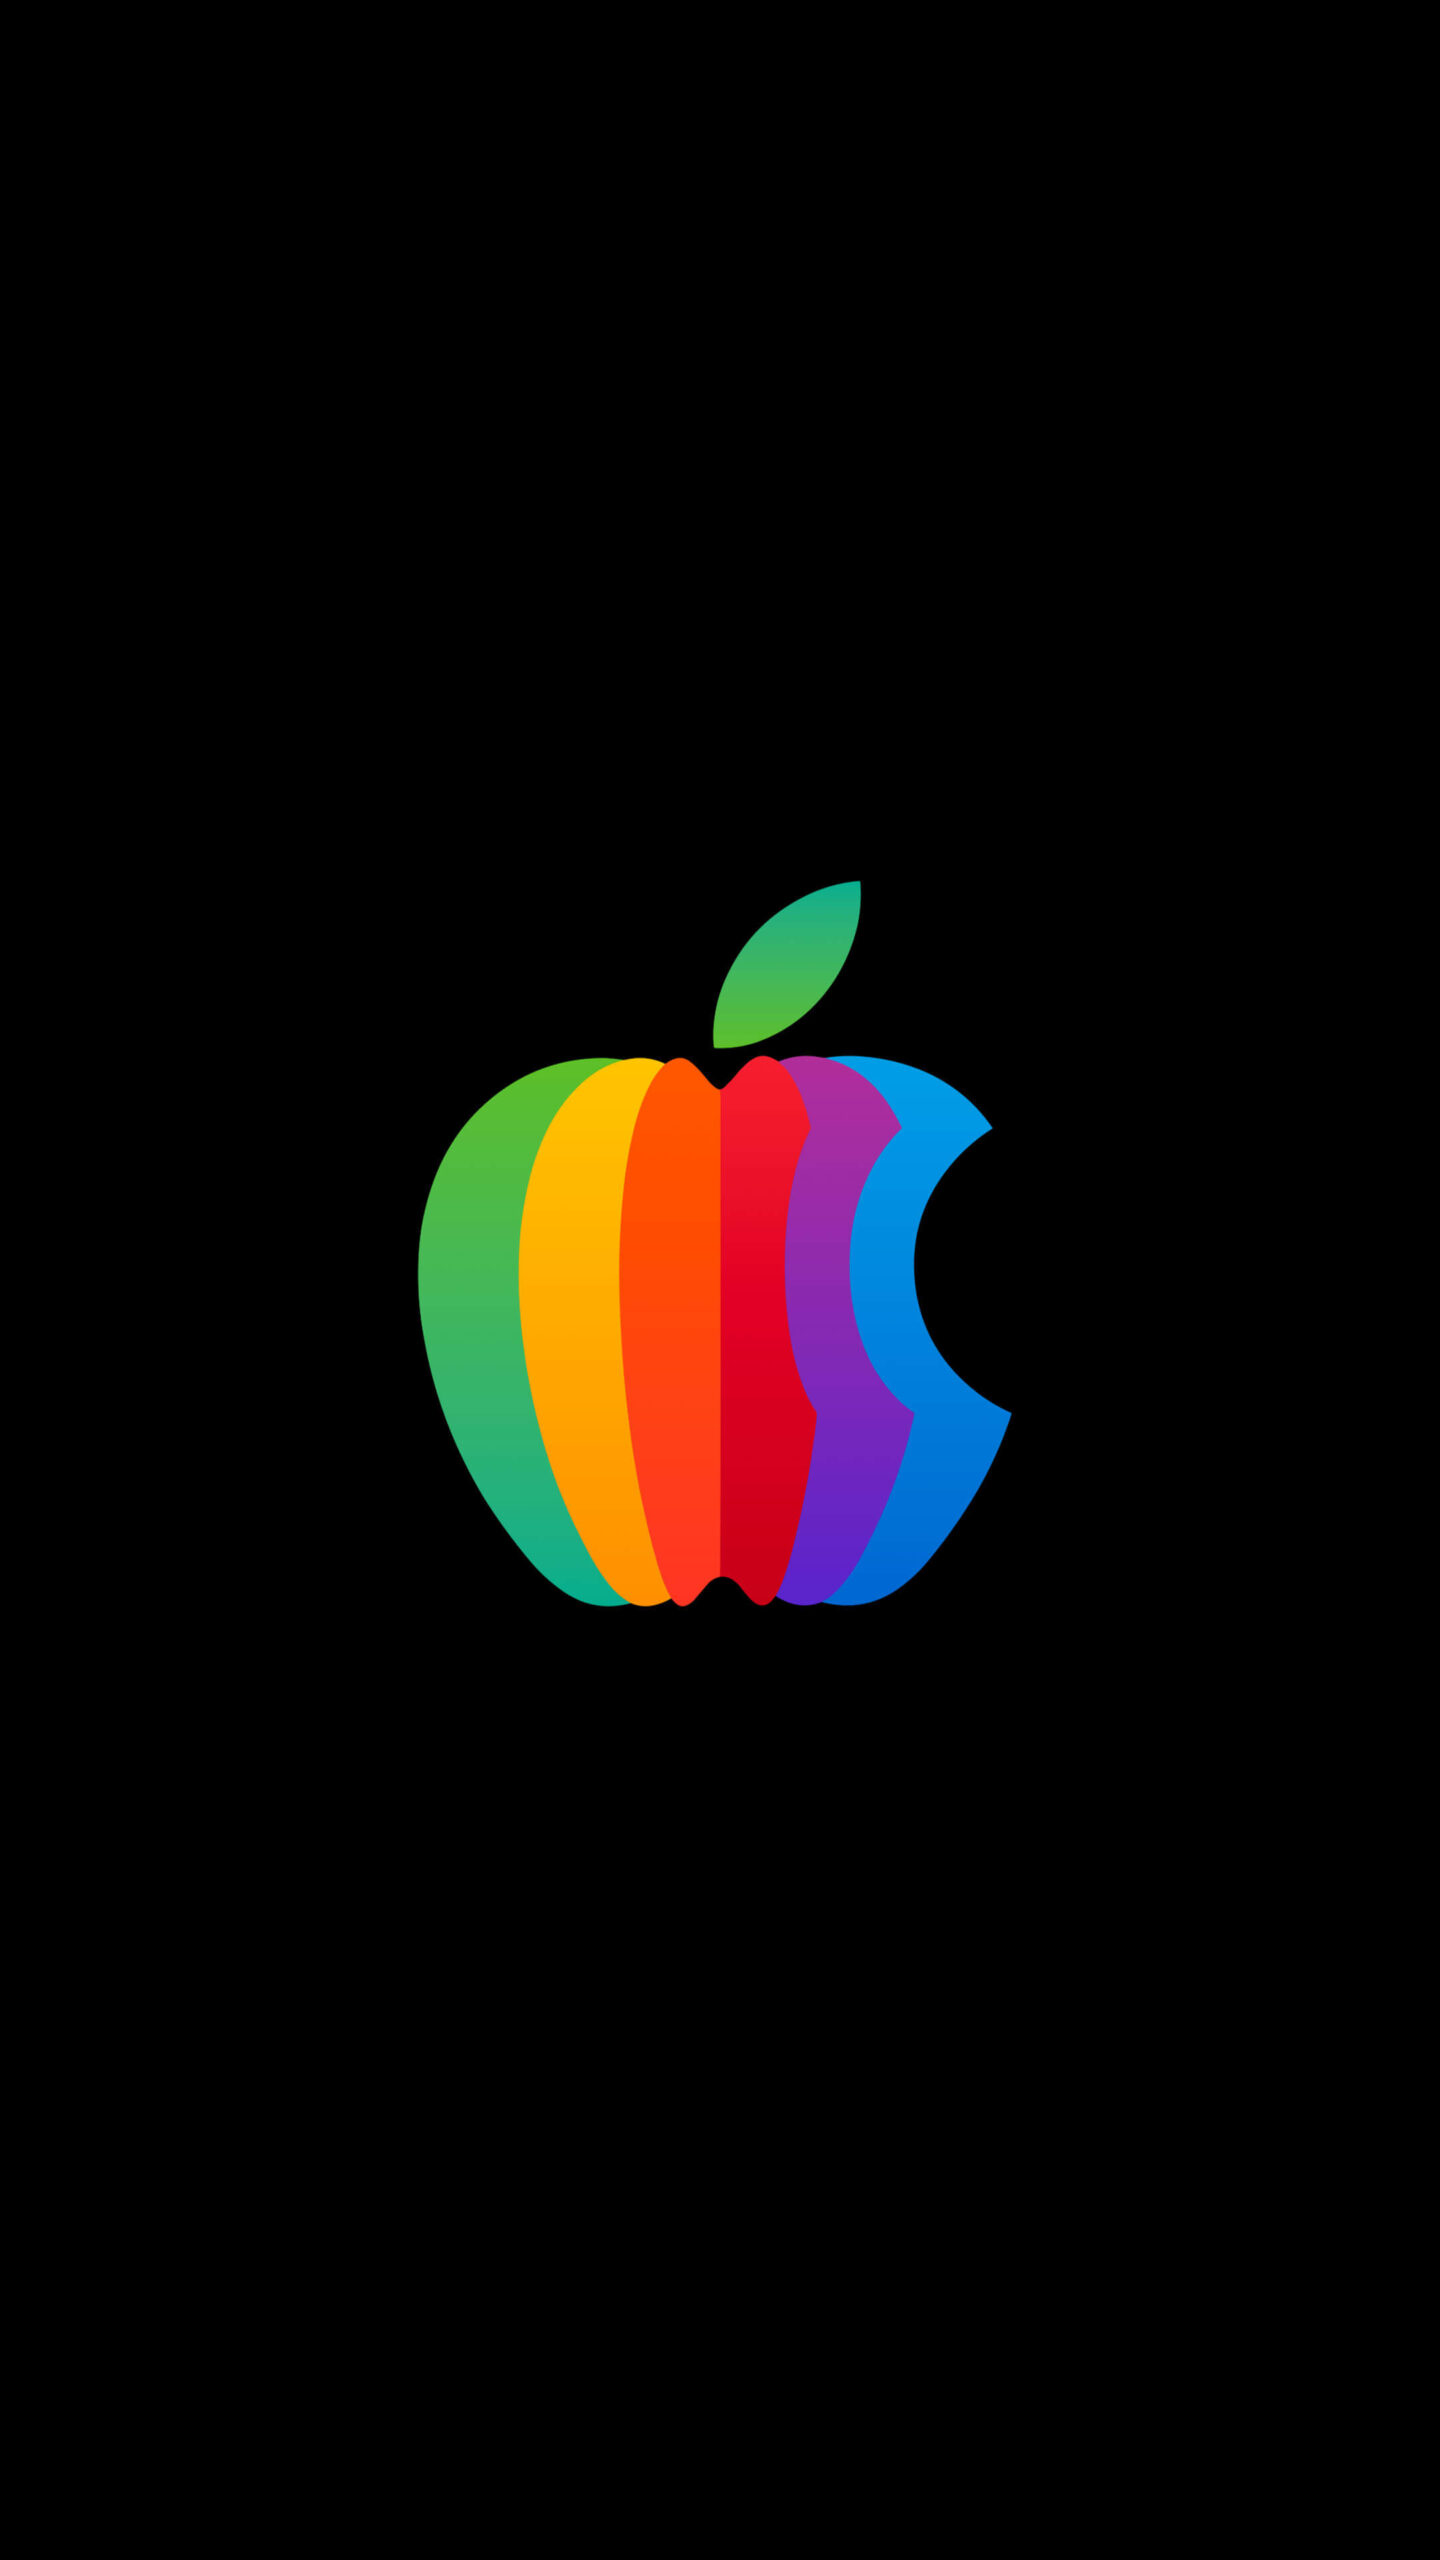 File:Apple logo black.svg - Wikipedia